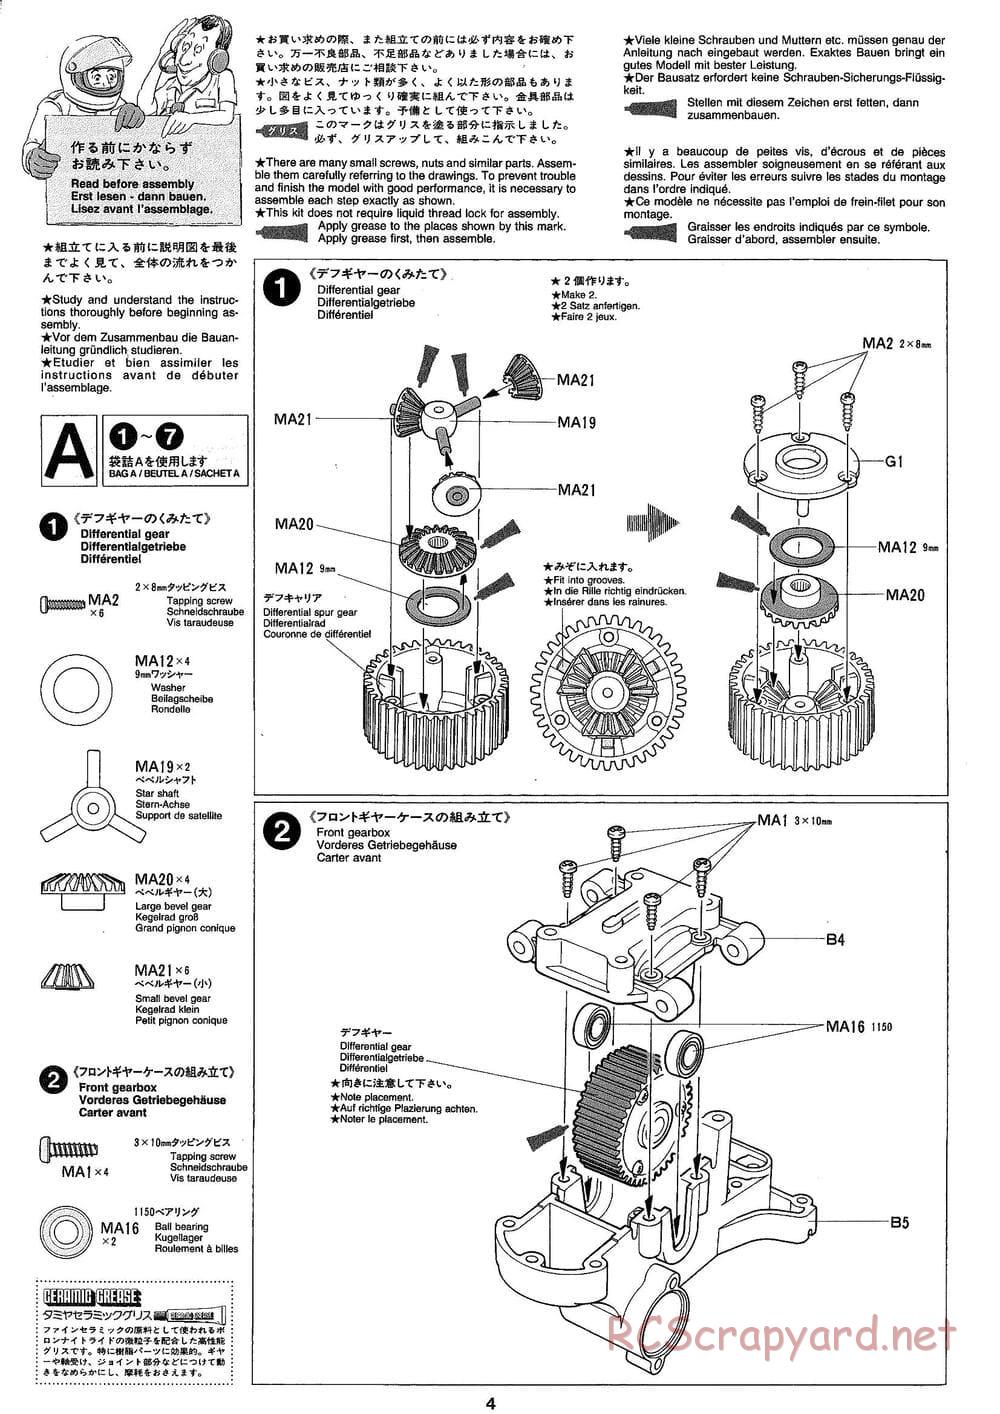 Tamiya - Mobil 1 NSX - TA-03R Chassis - Manual - Page 4